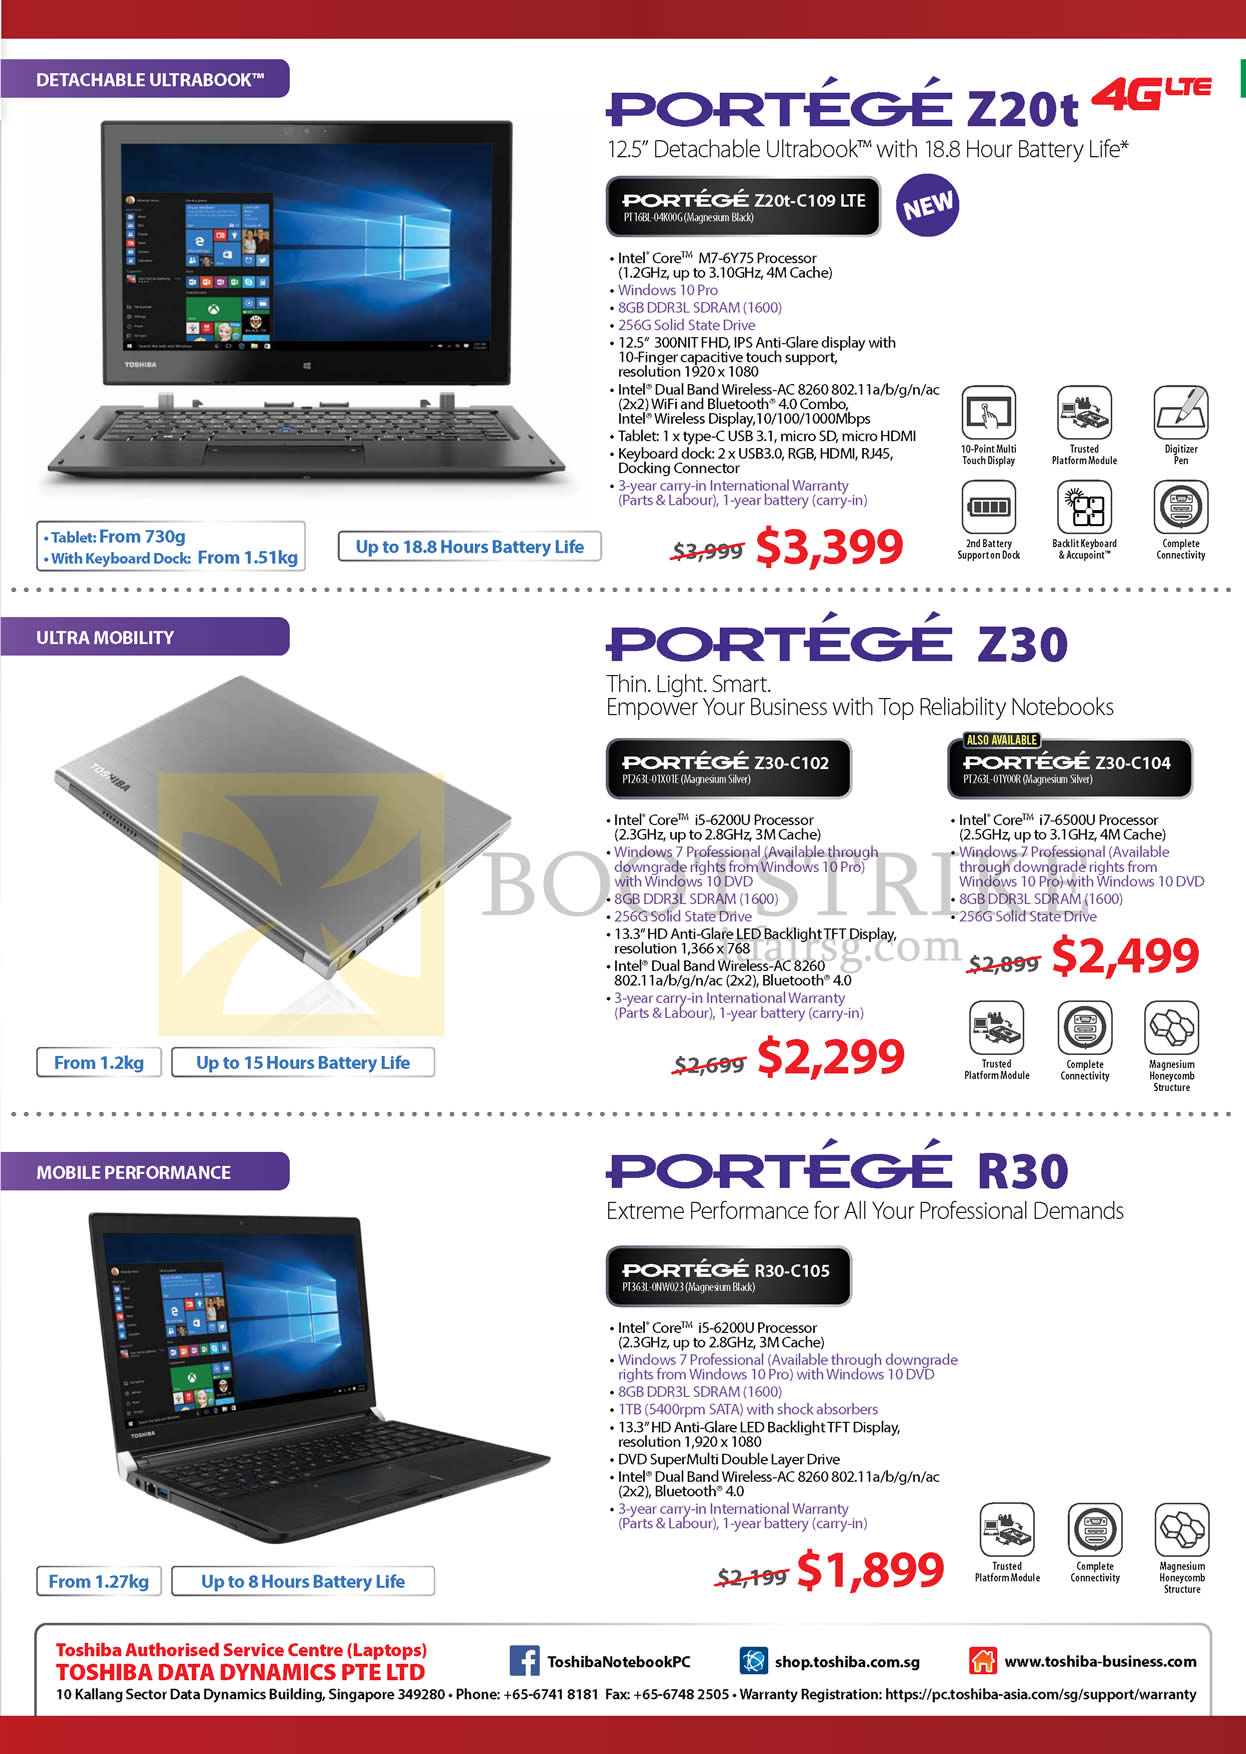 PC SHOW 2016 price list image brochure of Toshiba Notebooks Portege Z20t-C109LTE, Z30-C102, Z30-C104, R30-C105